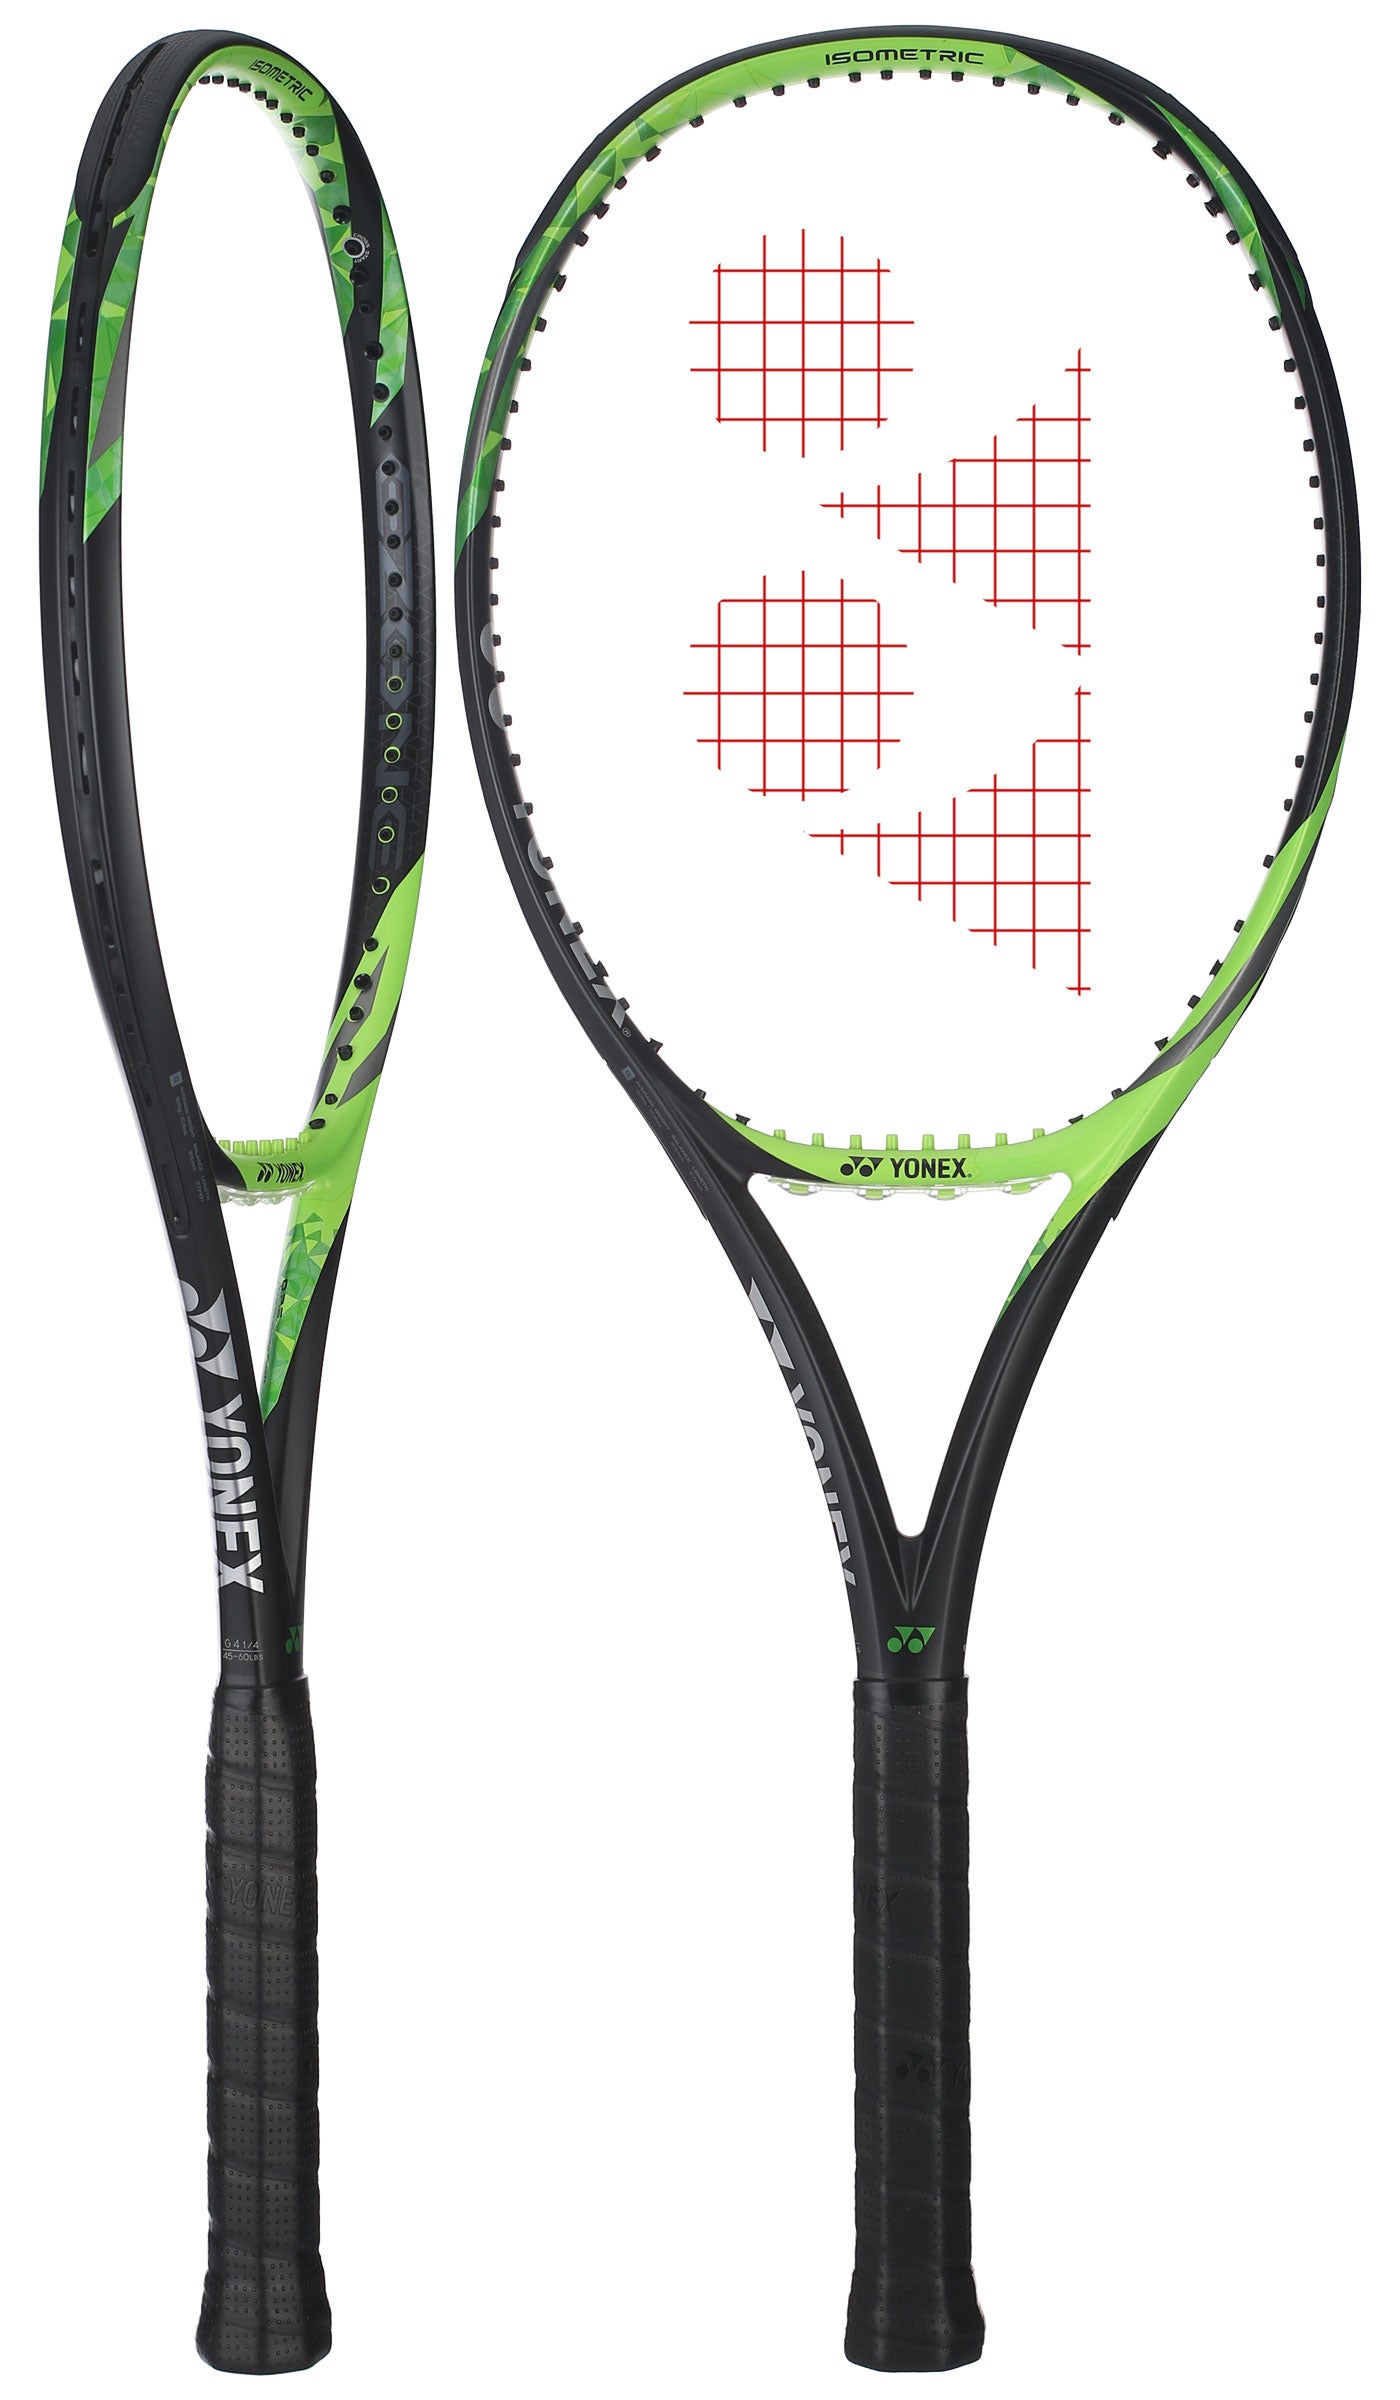 305g Tennis Racquet Authorized Dealer w/ Warranty Yonex EZONE 98 